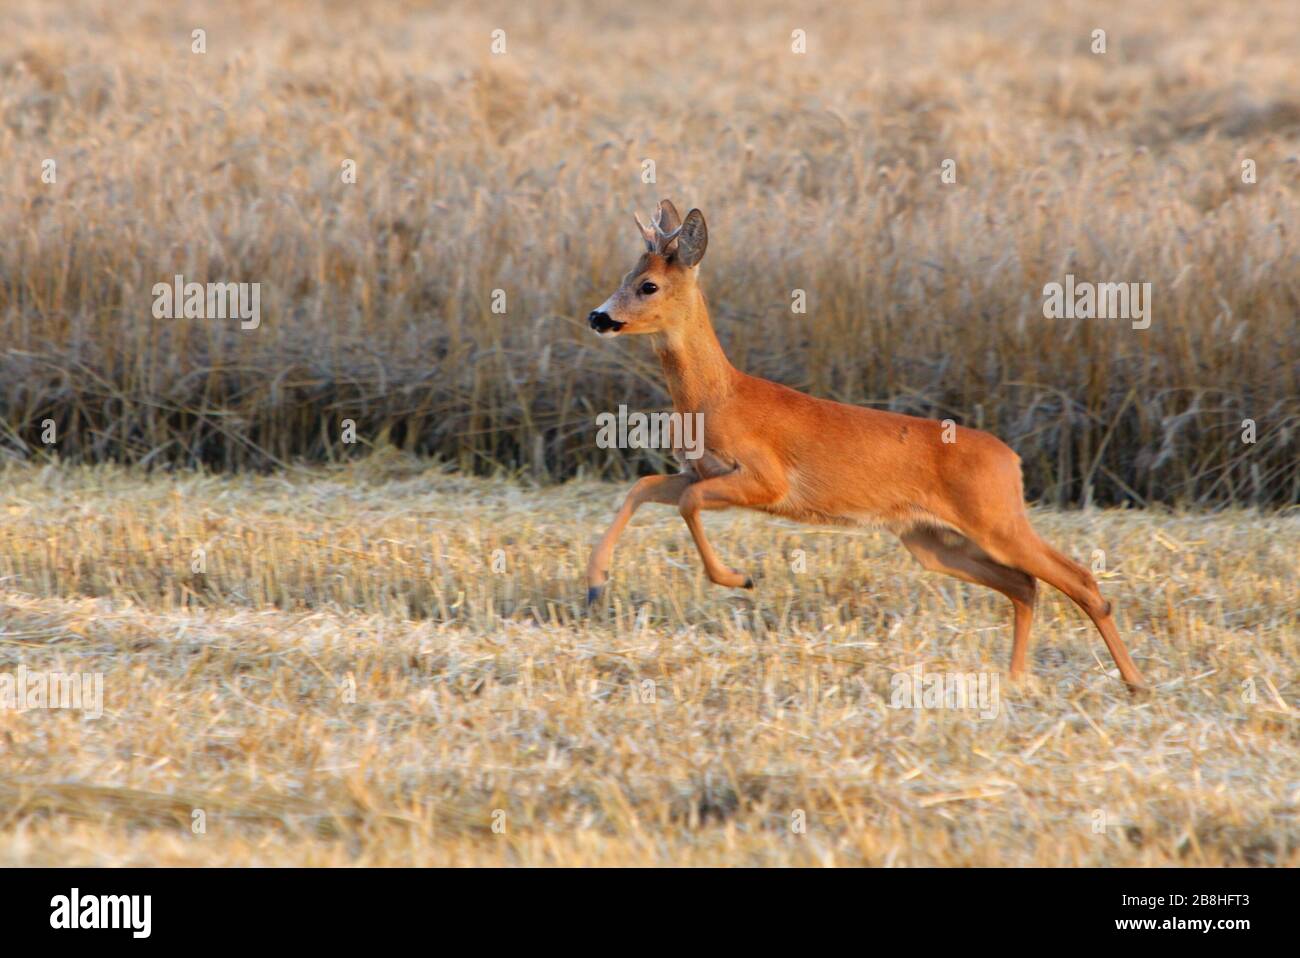 Deer jump on field Stock Photo